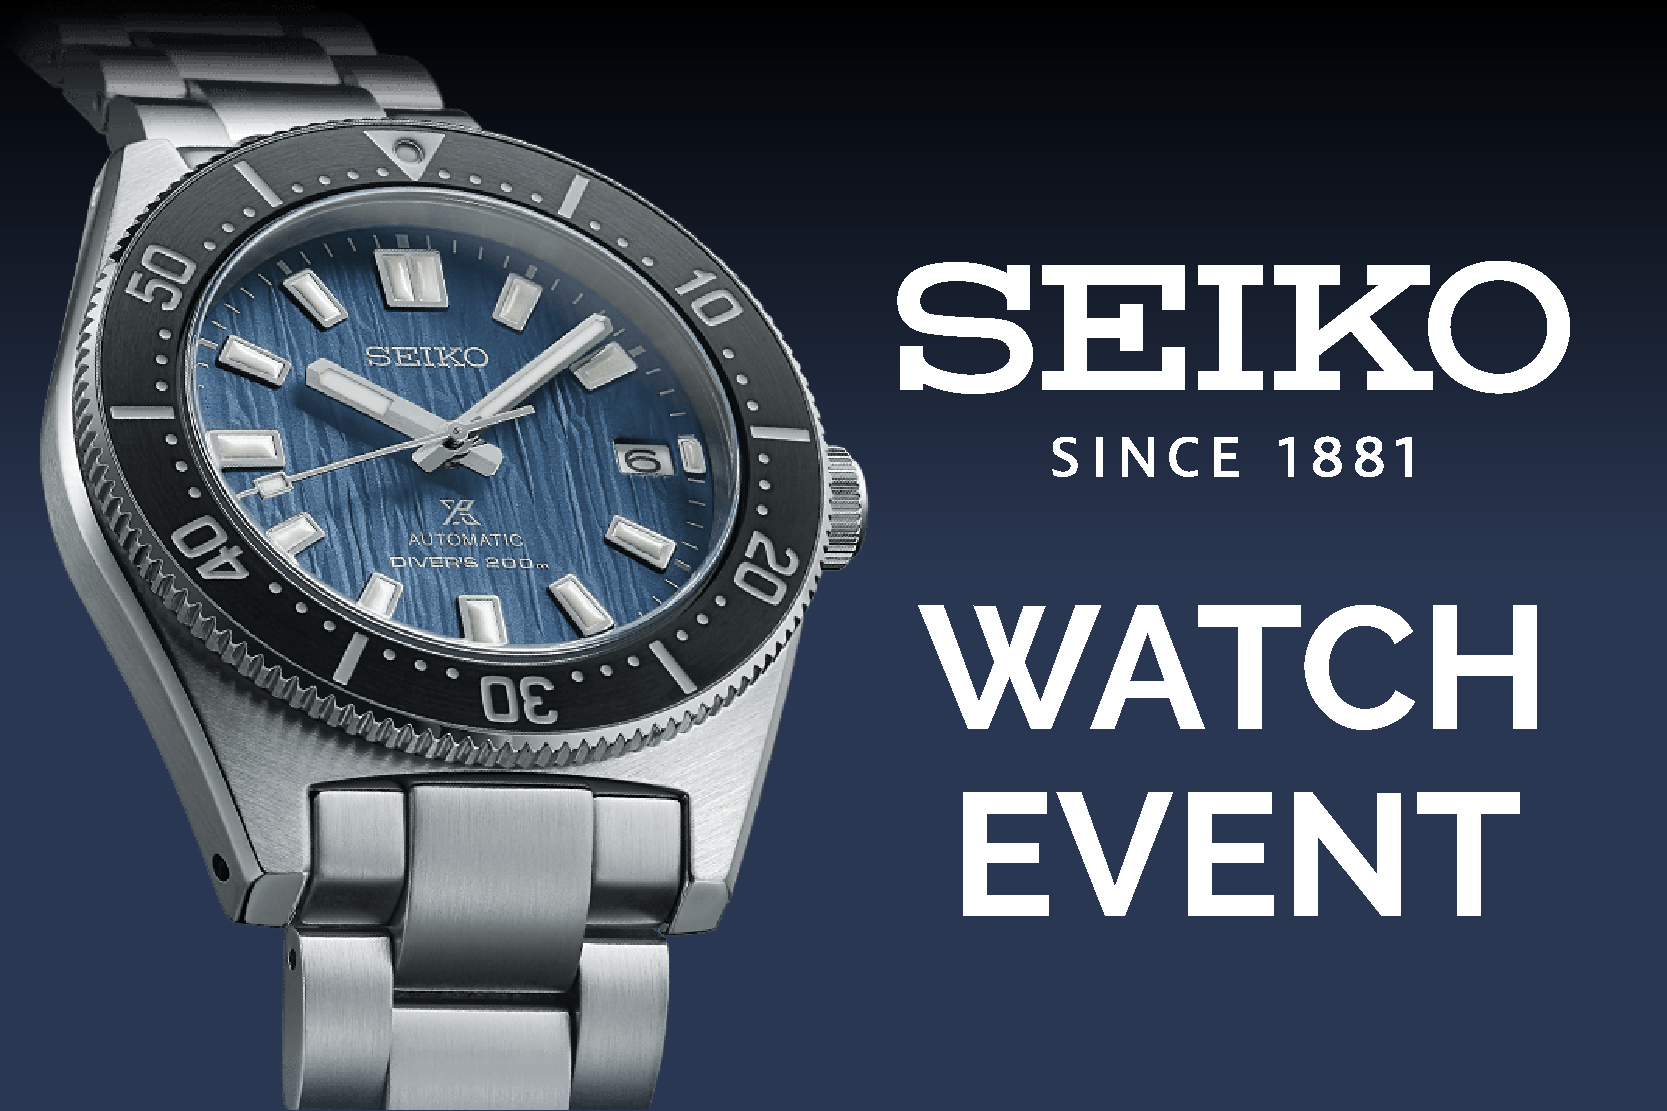 Seiko Watch & Scotch Event